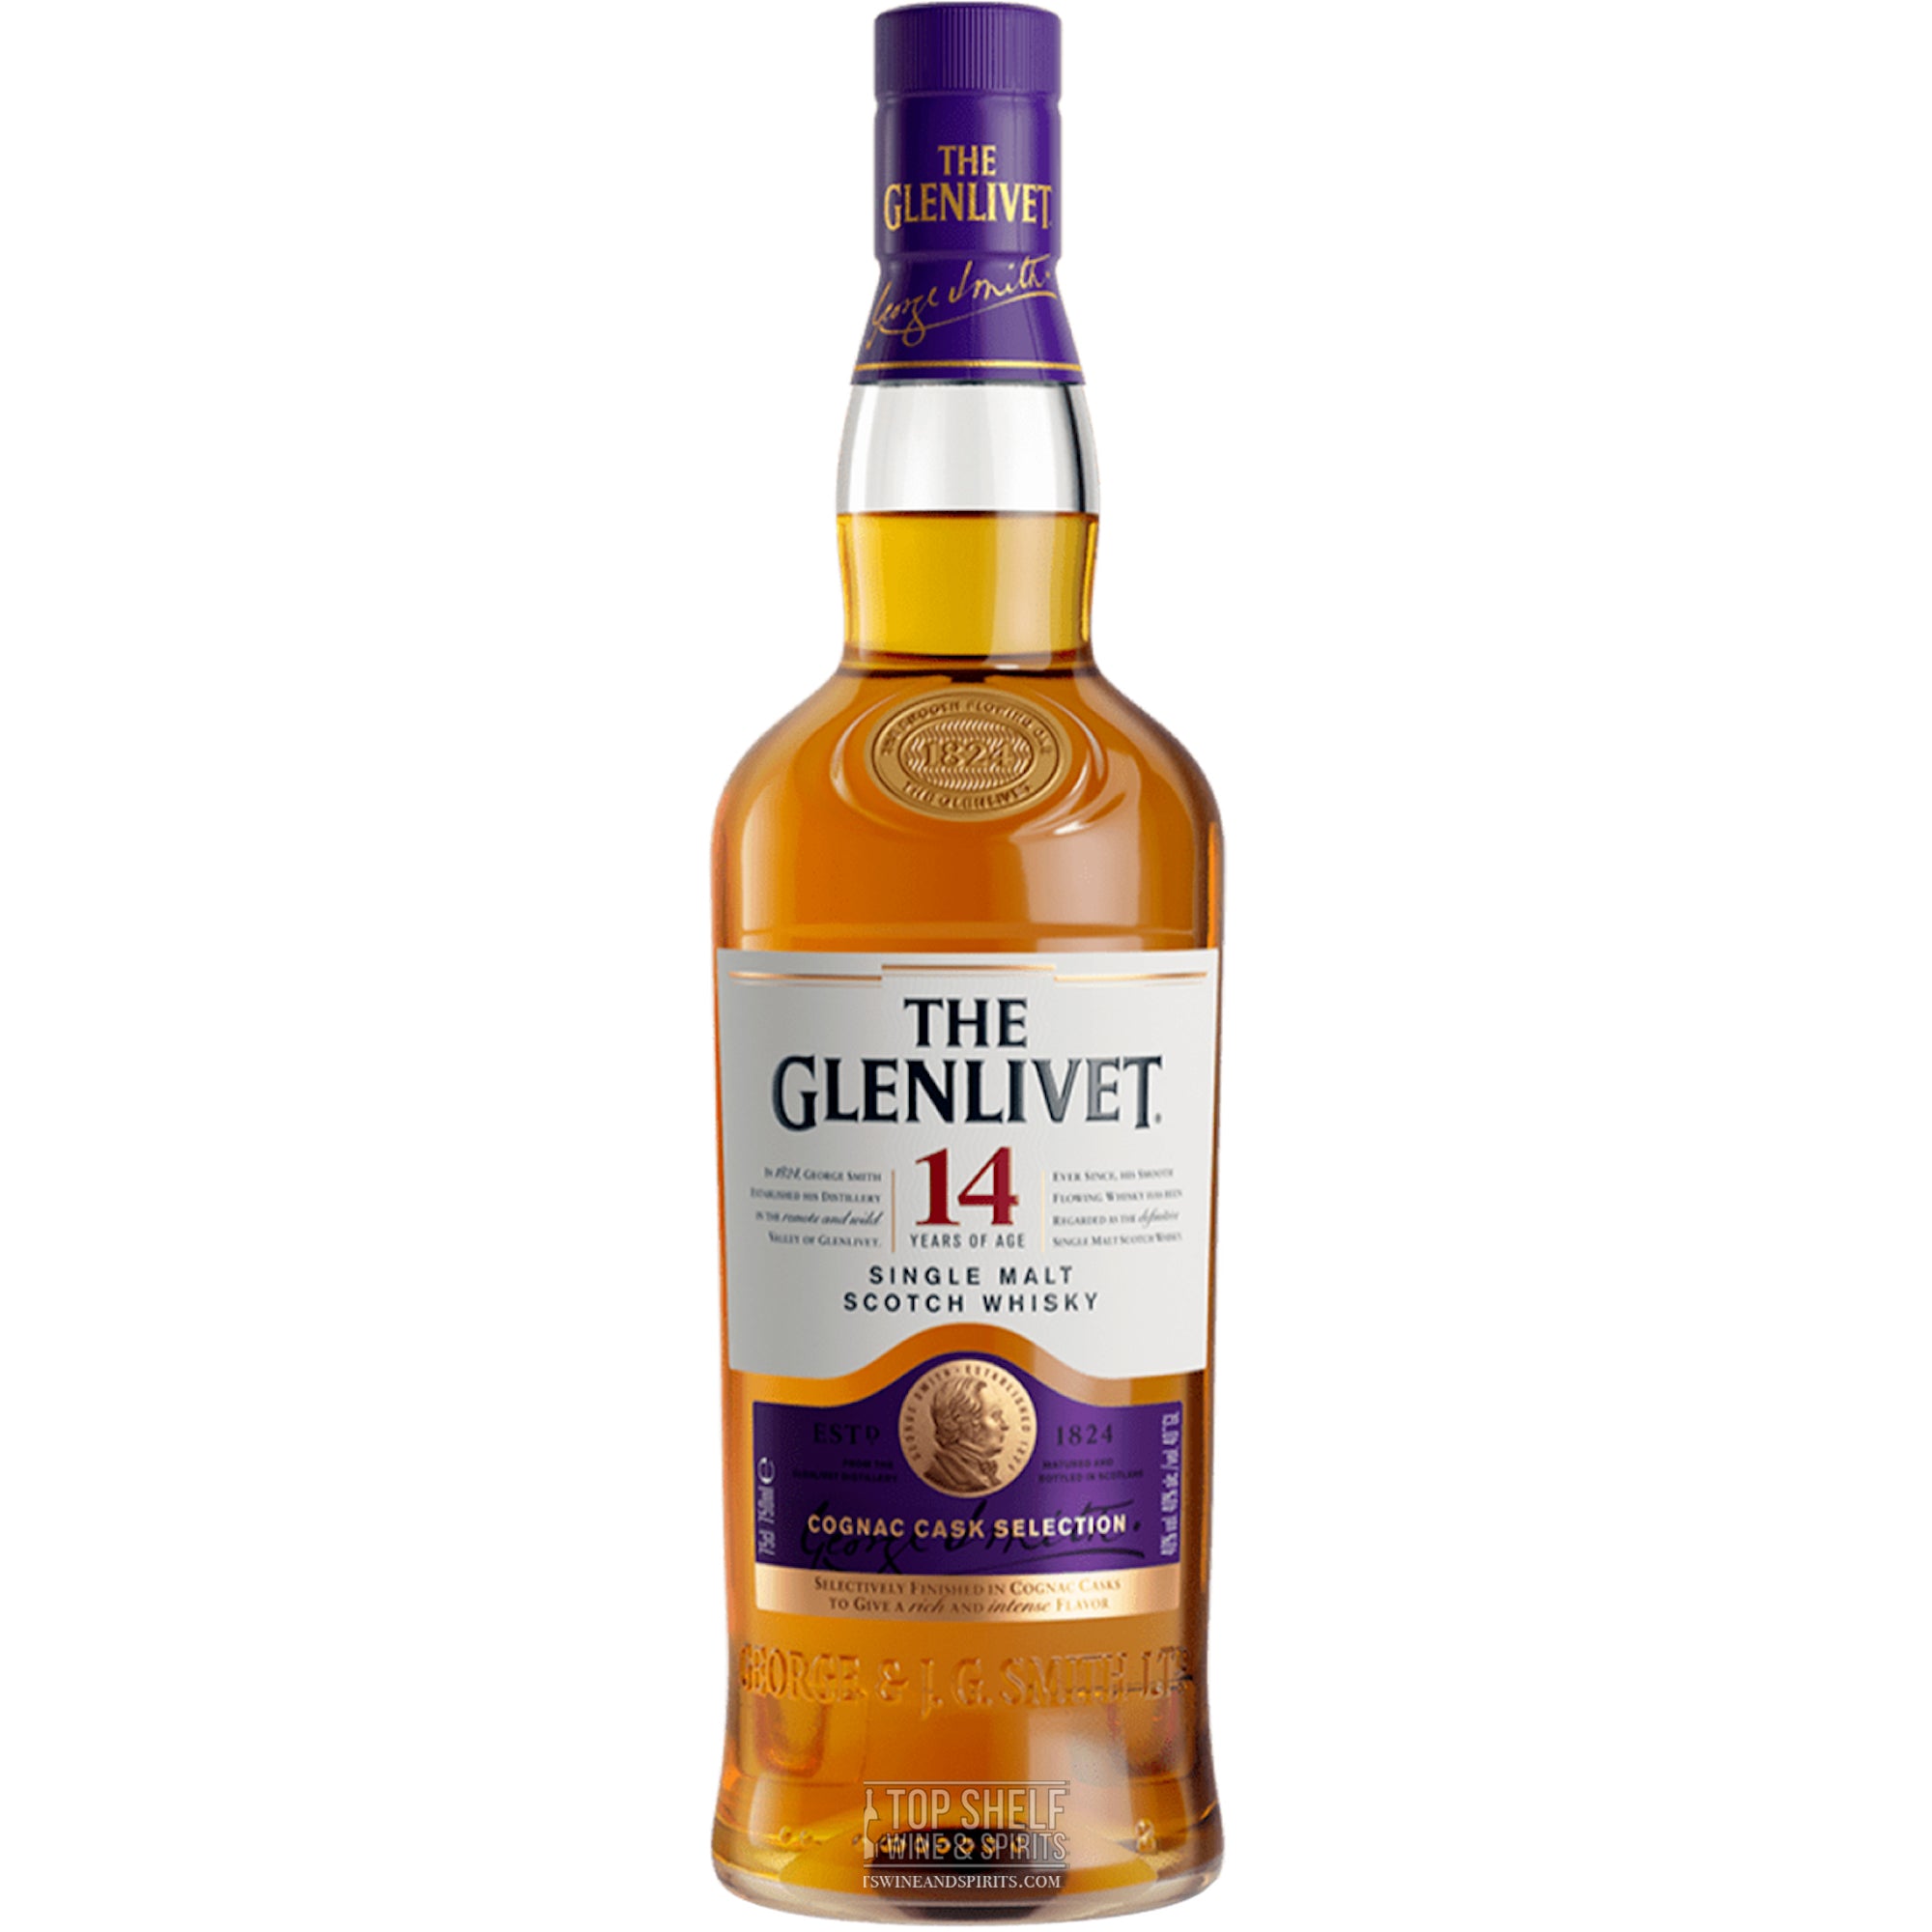 The Glenlivet 14 Year Cognac Cask Scotch